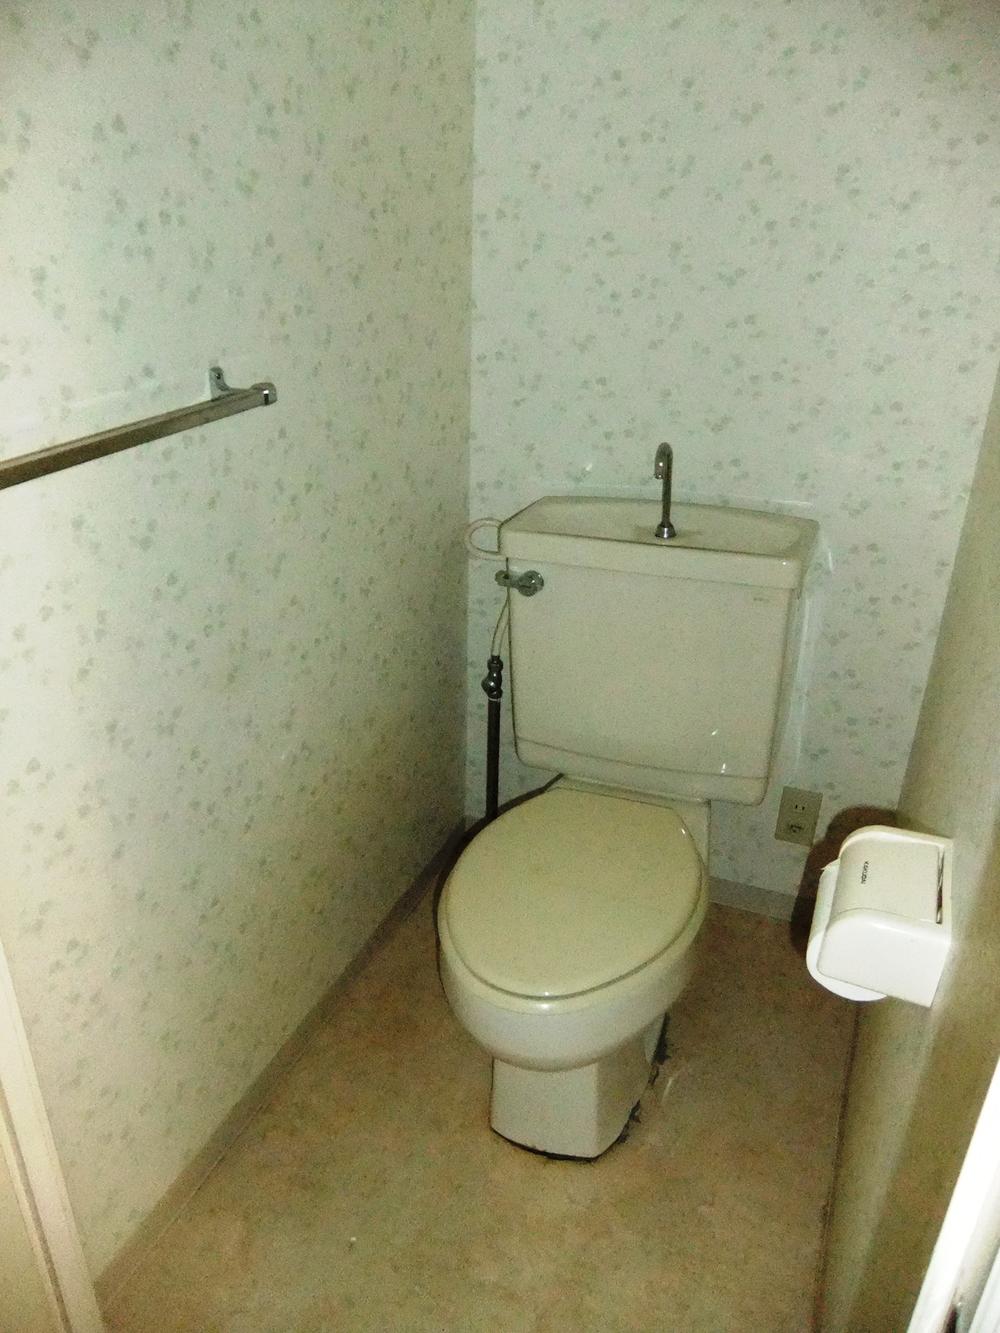 Toilet. Toilet (October 2013 shooting)